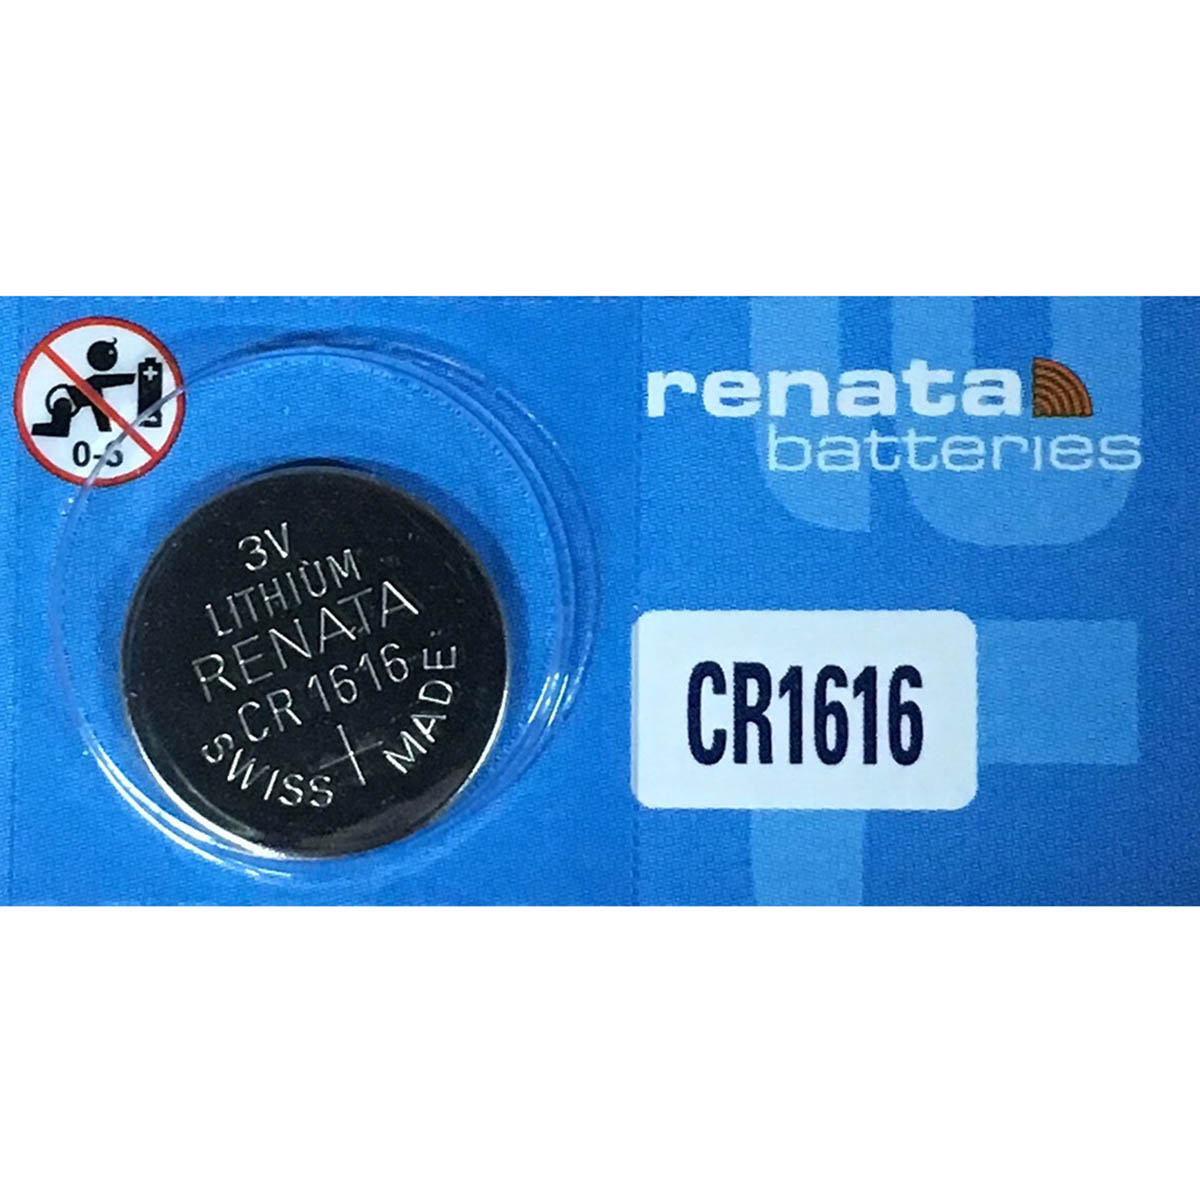 Renata CR1616 Battery - 3V 55mAh Lithium Coin Cell 500 Wholesale